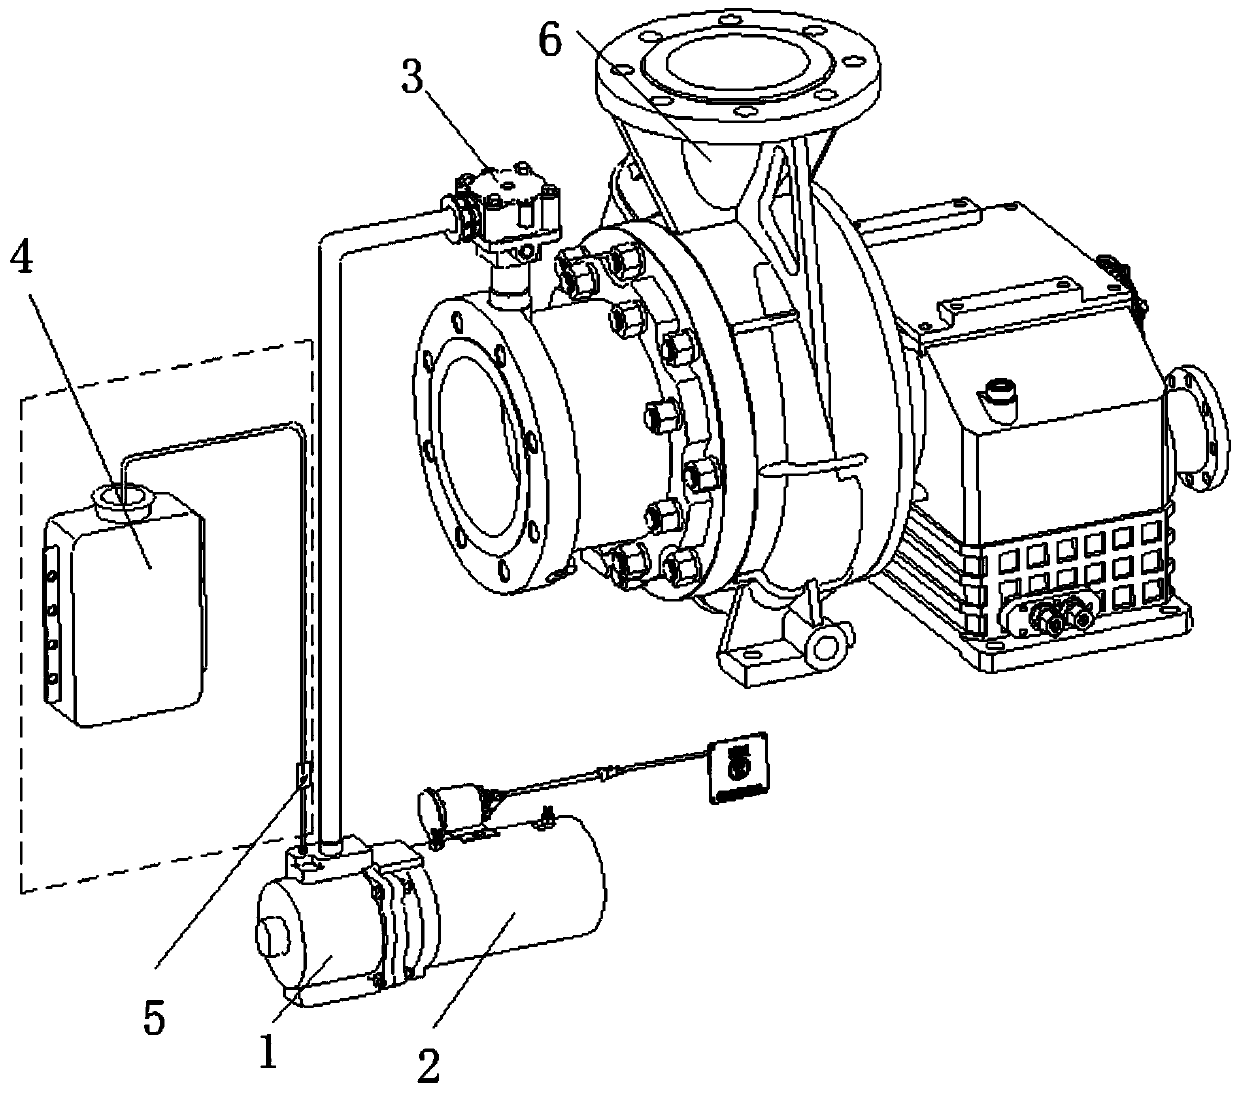 Electric vacuum pump water diversion system for pump